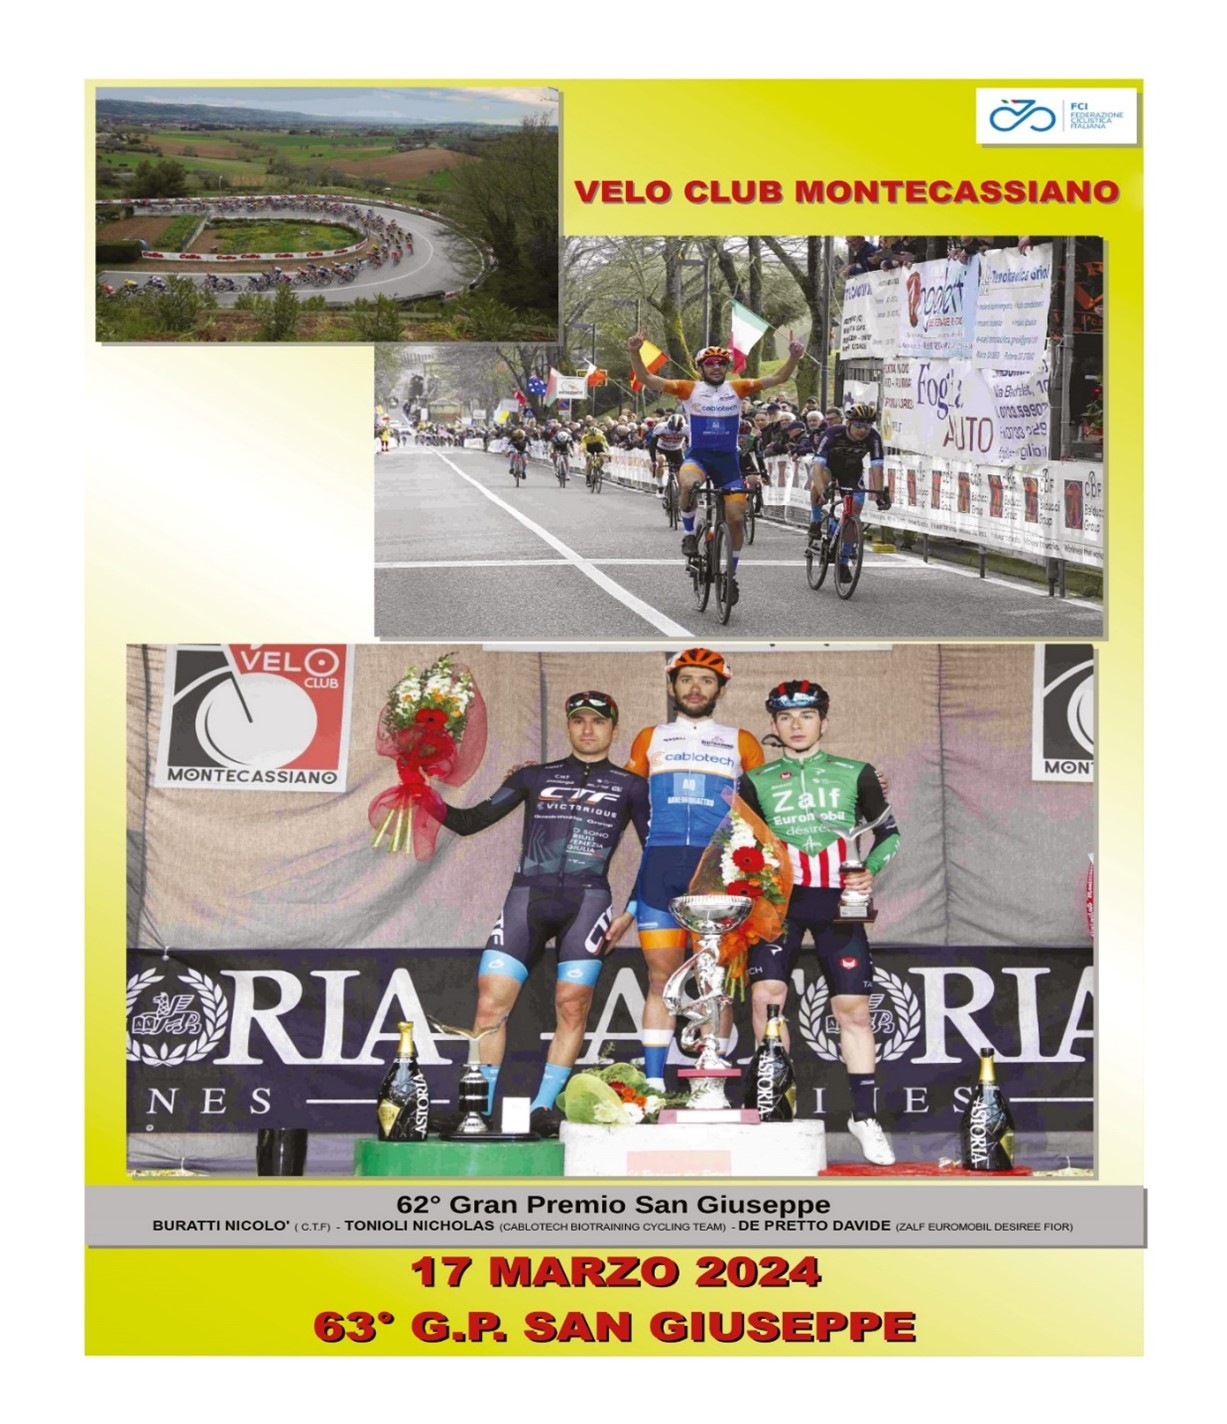 Montecassiano (MC) - 63° G.P. San Giuseppe di Ciclismo